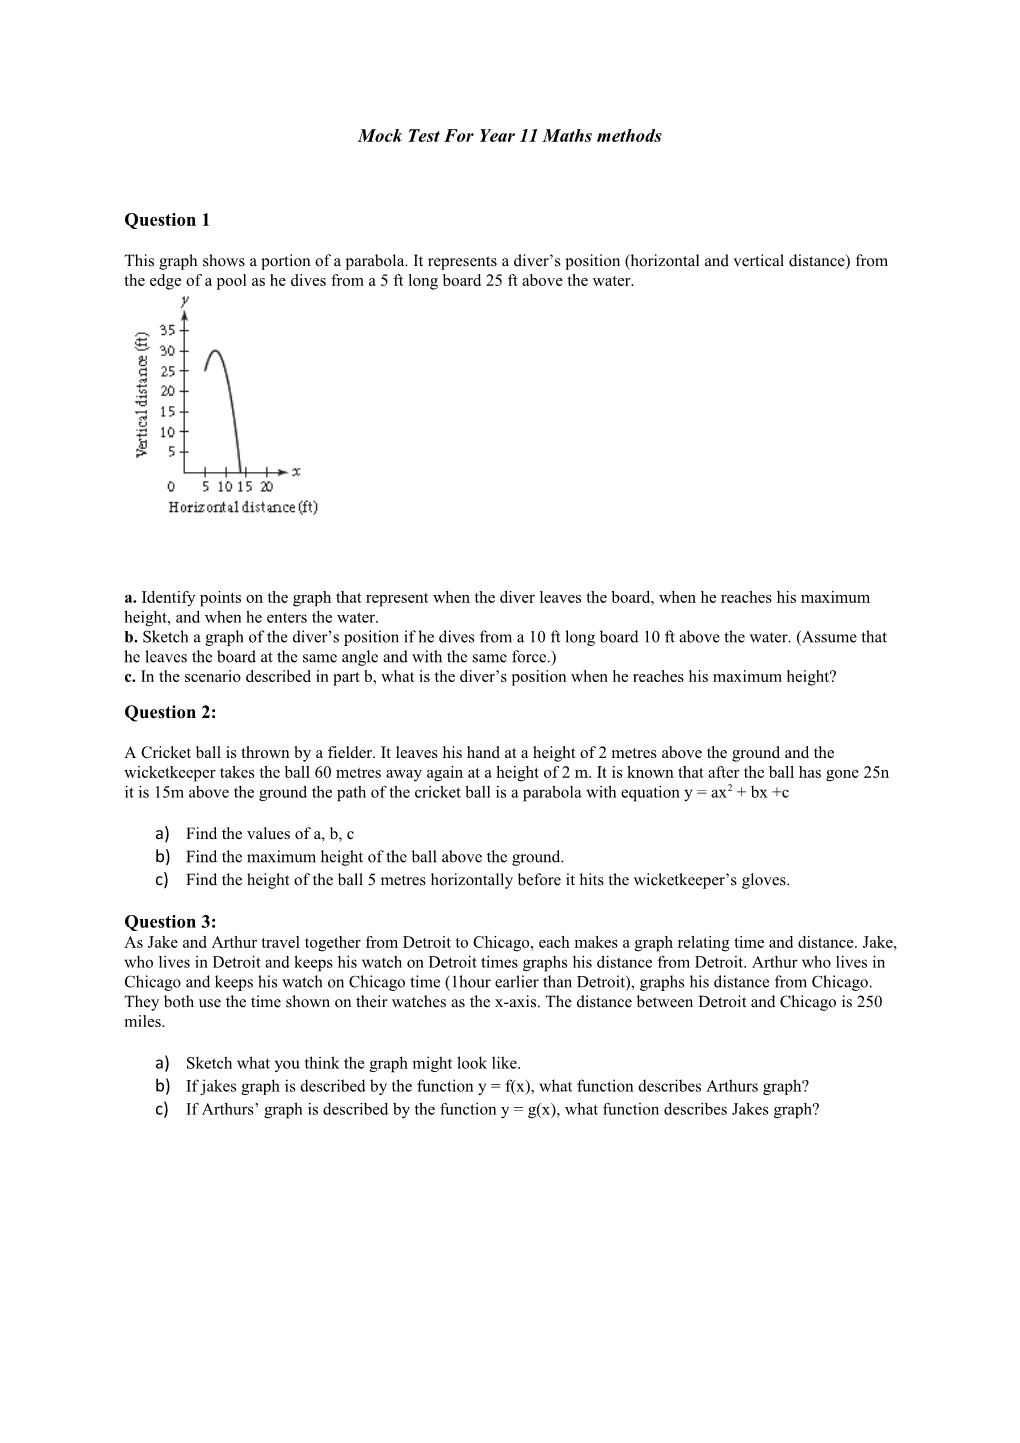 Mock Test for Year 11 Maths Methods